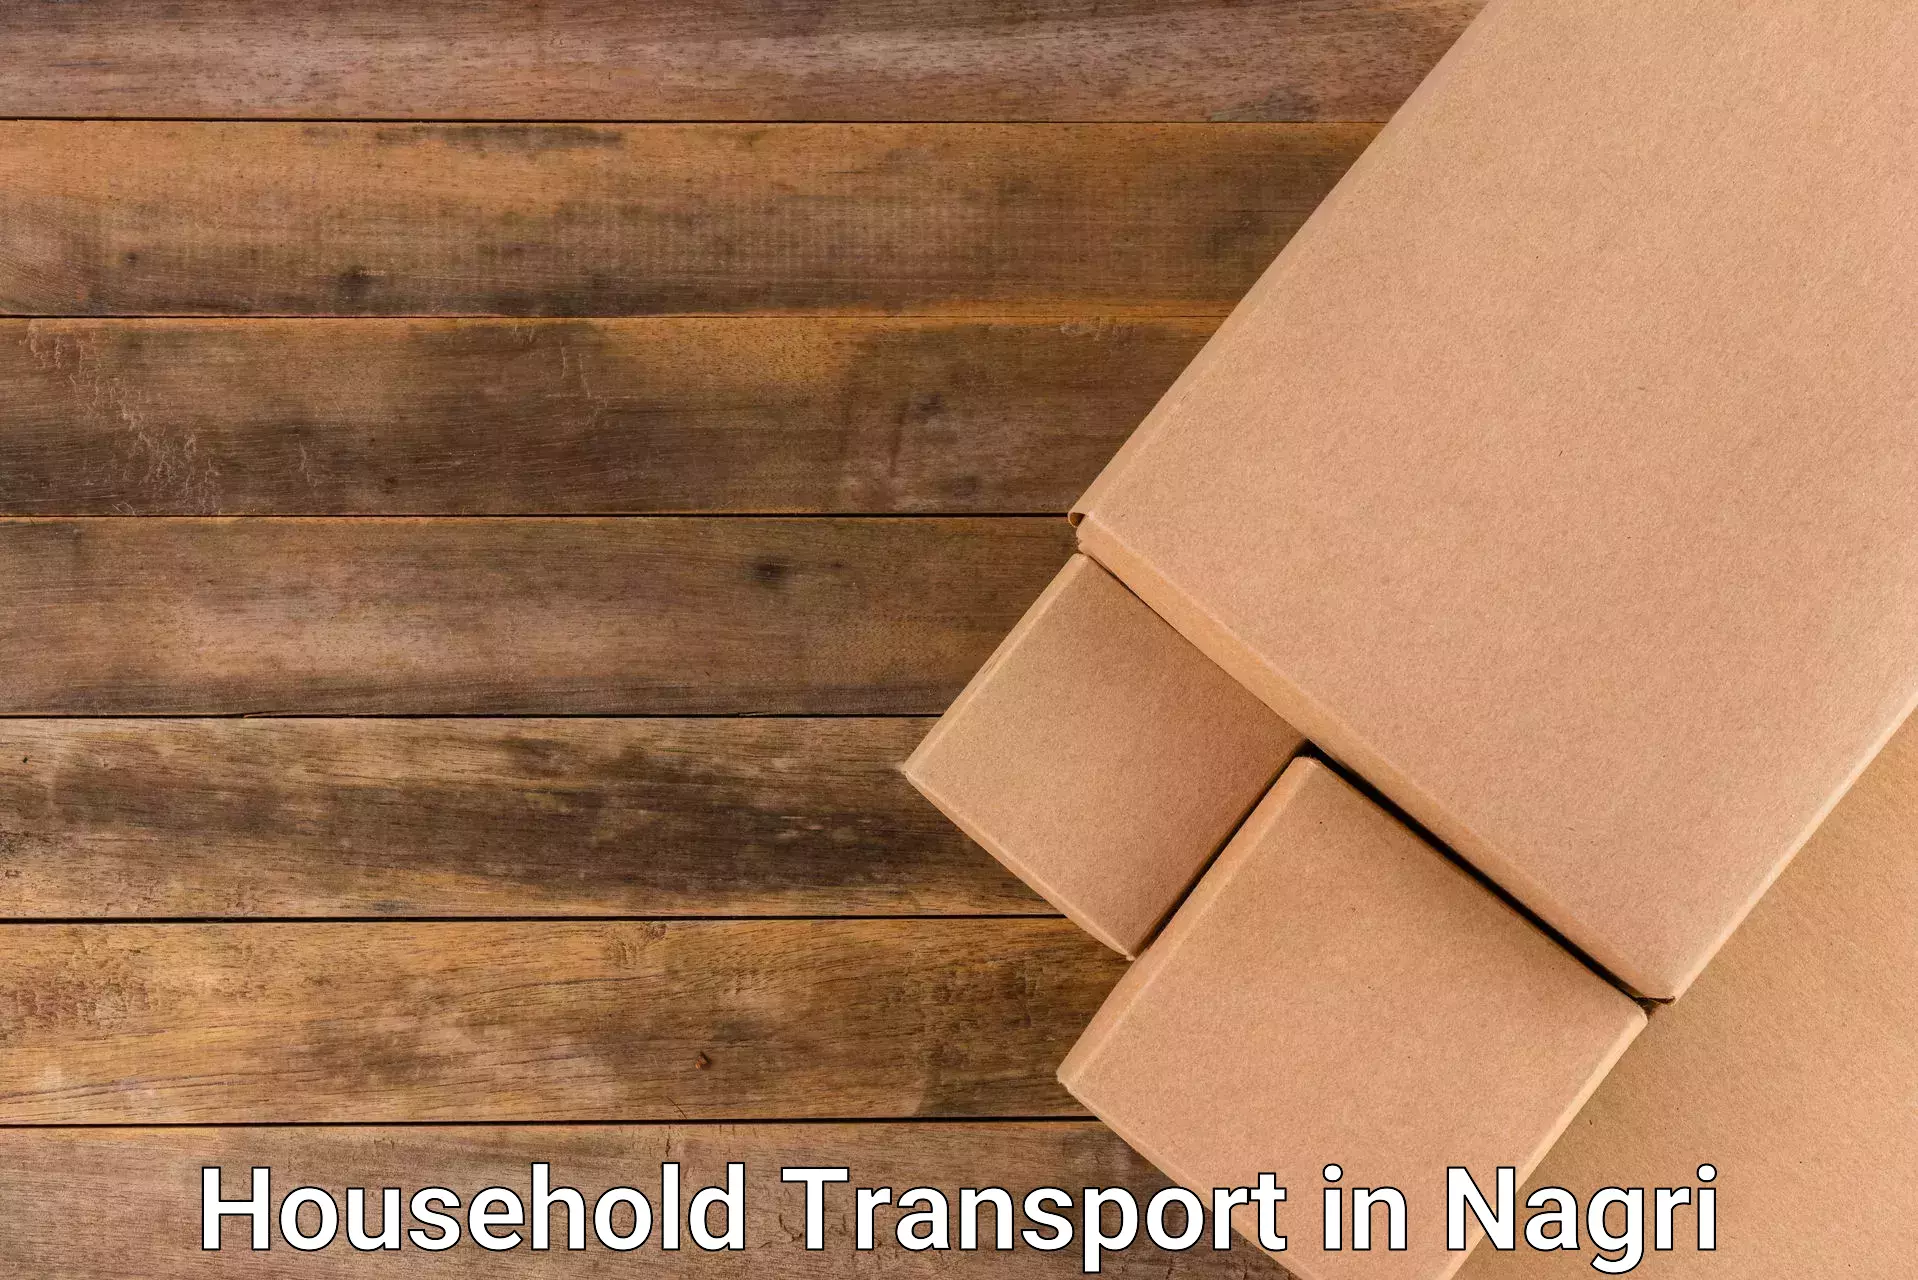 Quality household transport in Nagri